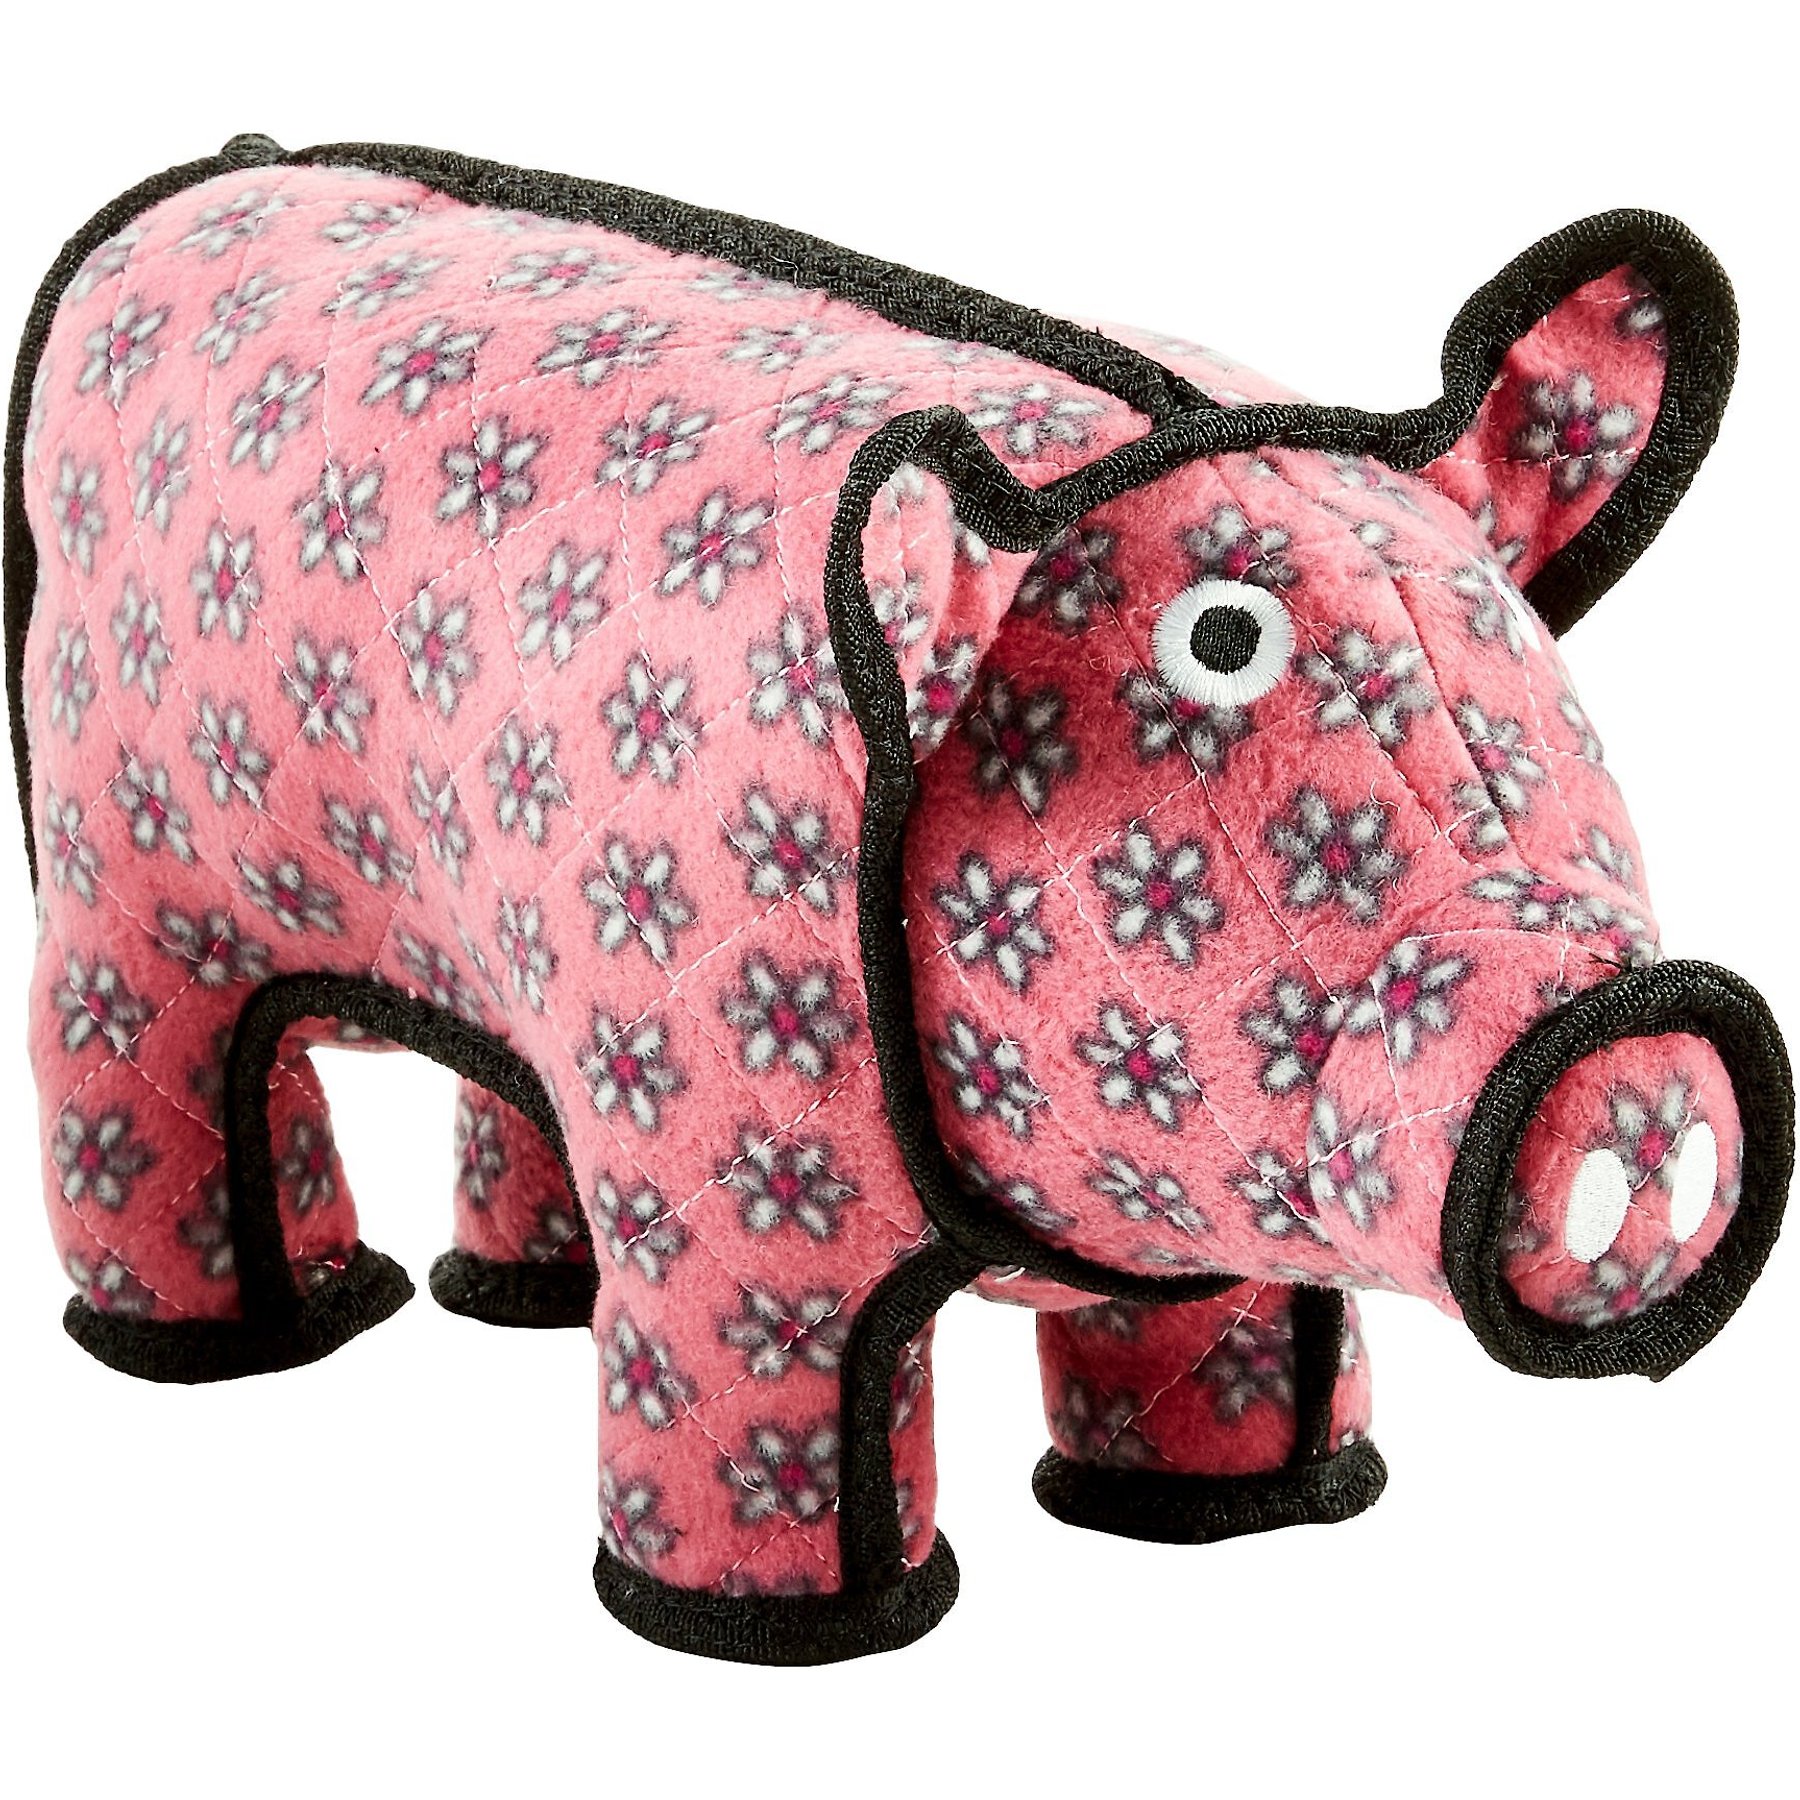 TUFFY'S Jr Bone2 Squeaky Plush Dog Toy, Pink Leopard 